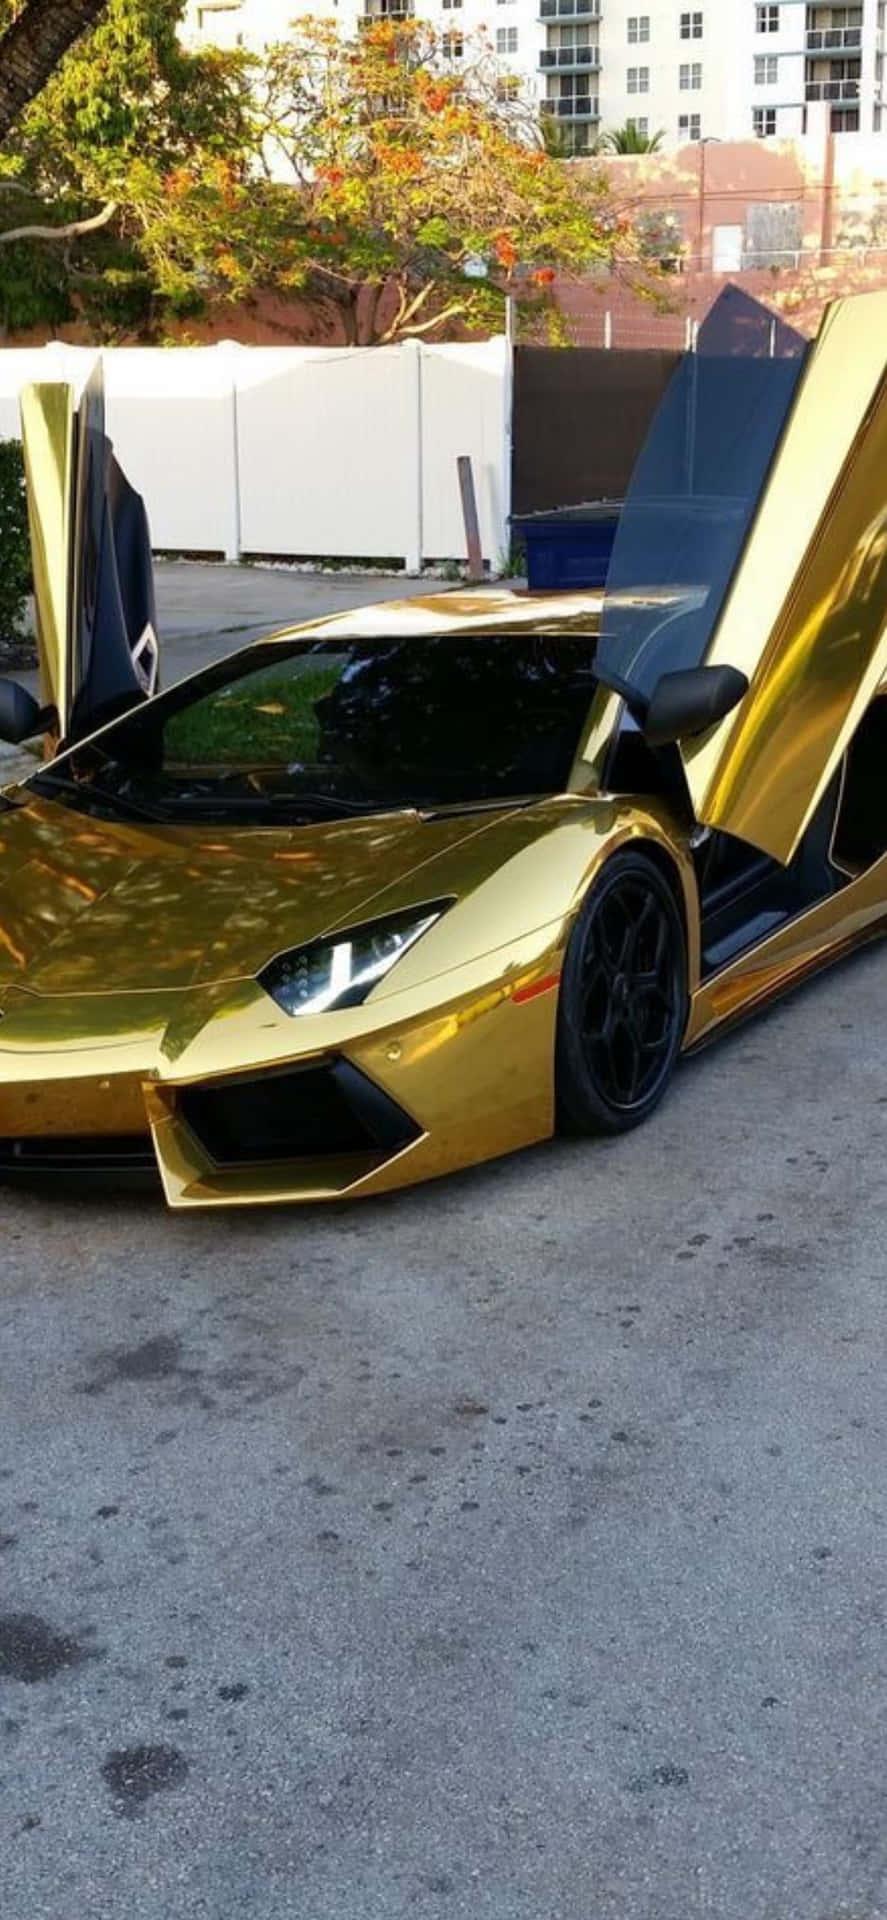 Iphonexs Max Lamborghini Gold Aventador Bakgrundsbild.